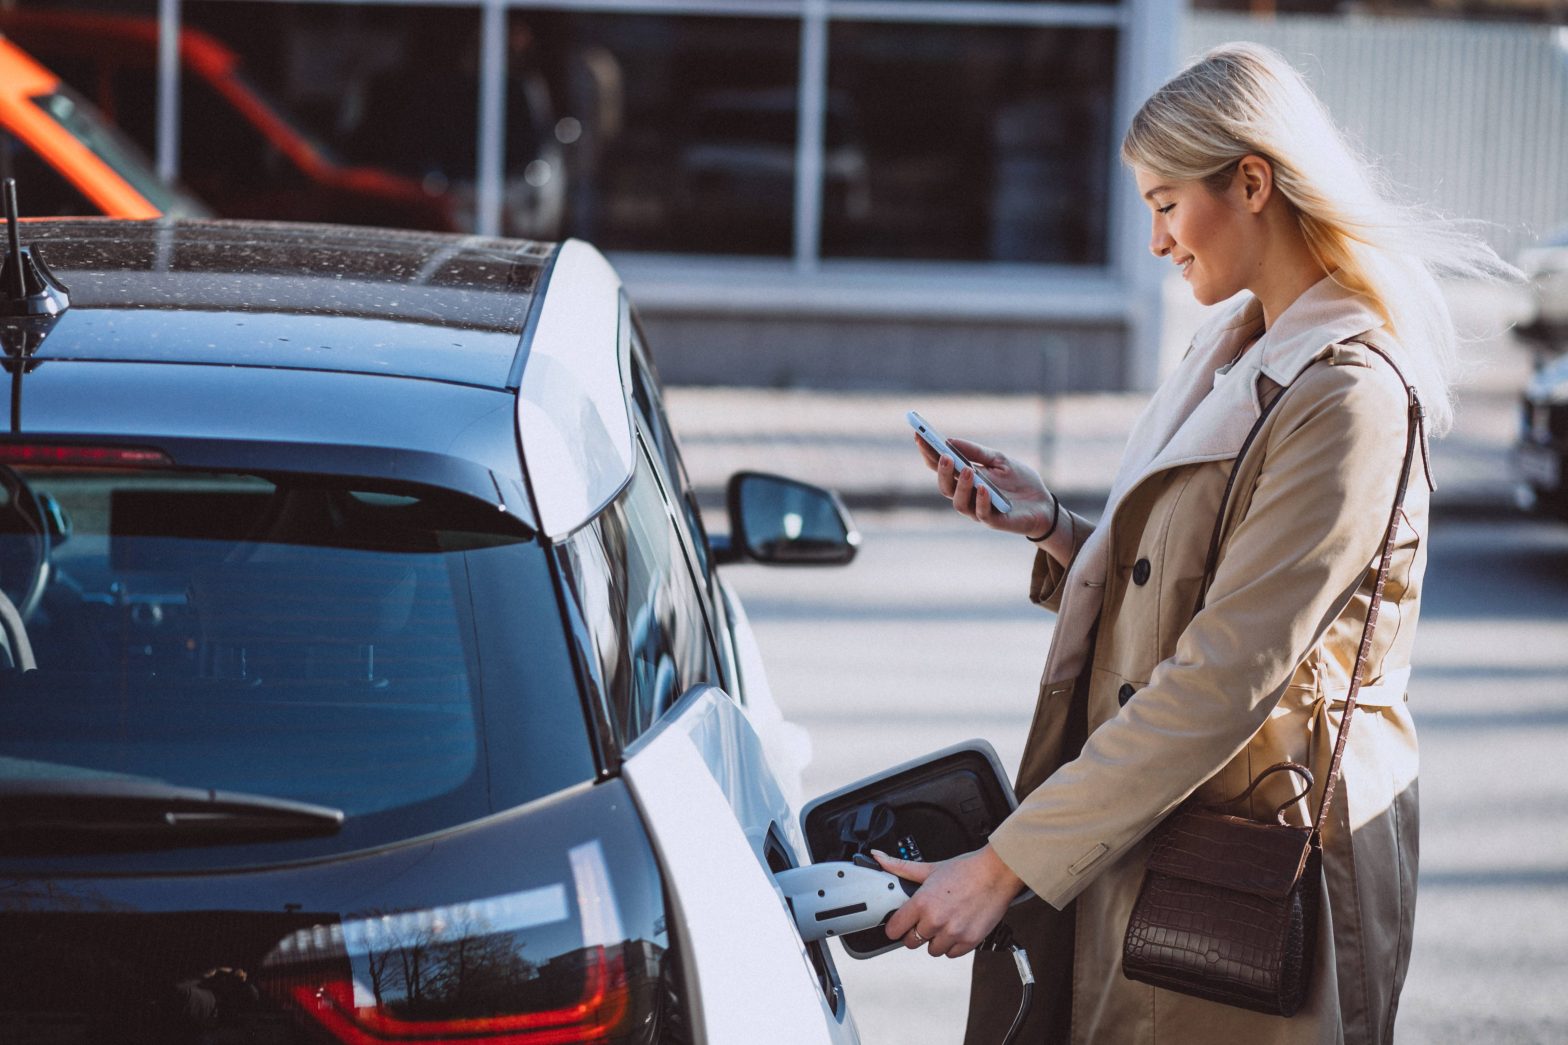 Women looking mobile outside a car